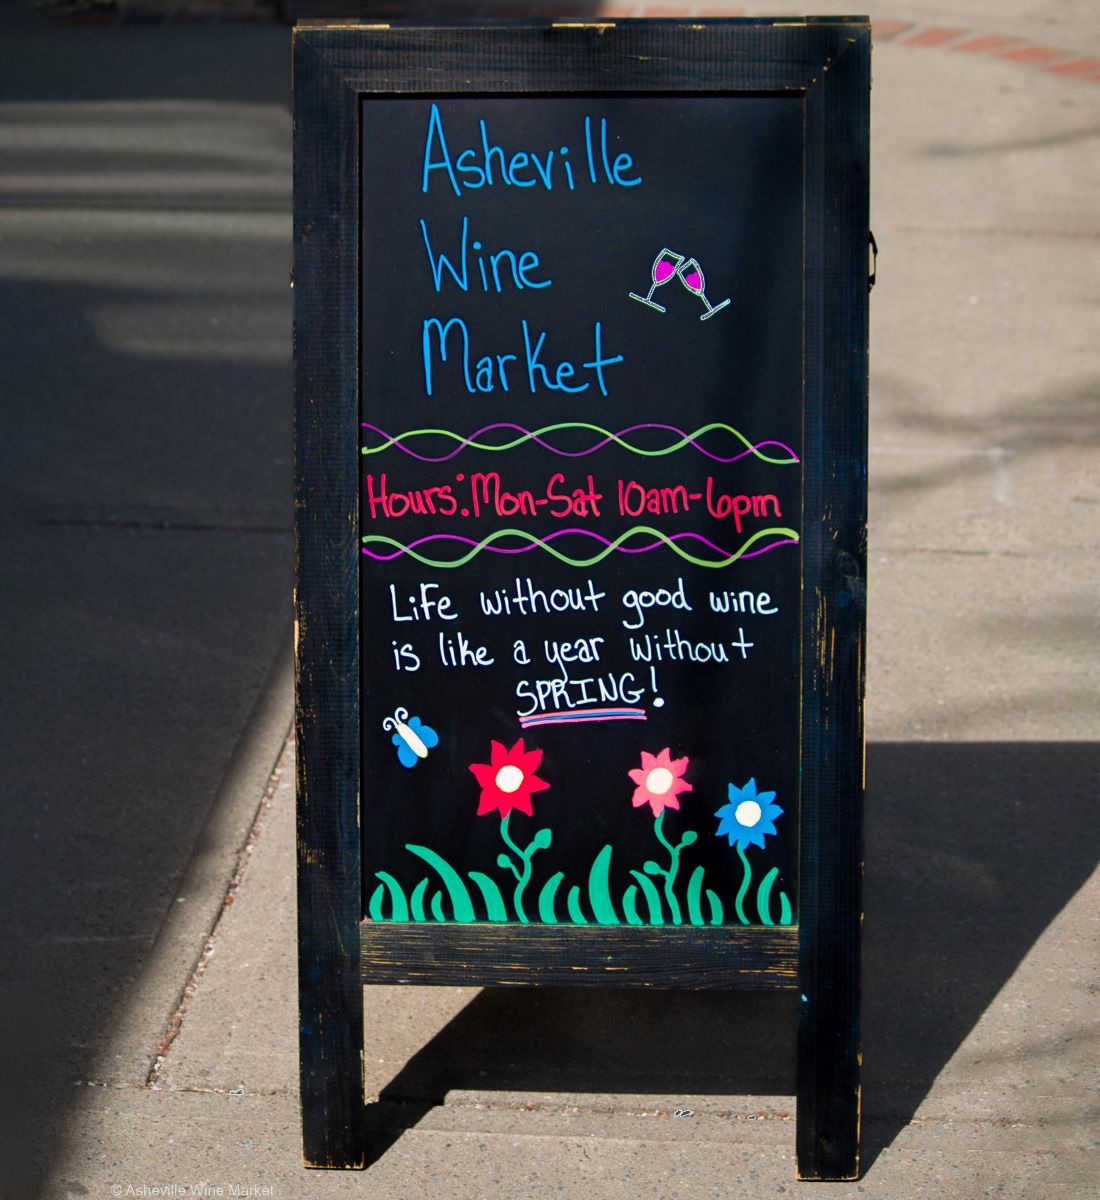 So true, so true.
#springhassprung
.
.
.
.
.
.
#828isgreat #wine #828
#ashevillewinemarket #ashevillewine
#ashevilledrinks #avlwine
#besteurowine #foodandwine #avl
#redwine #whitewine #realwine #bordeaux
#realwine #frenchwine
#winetasting